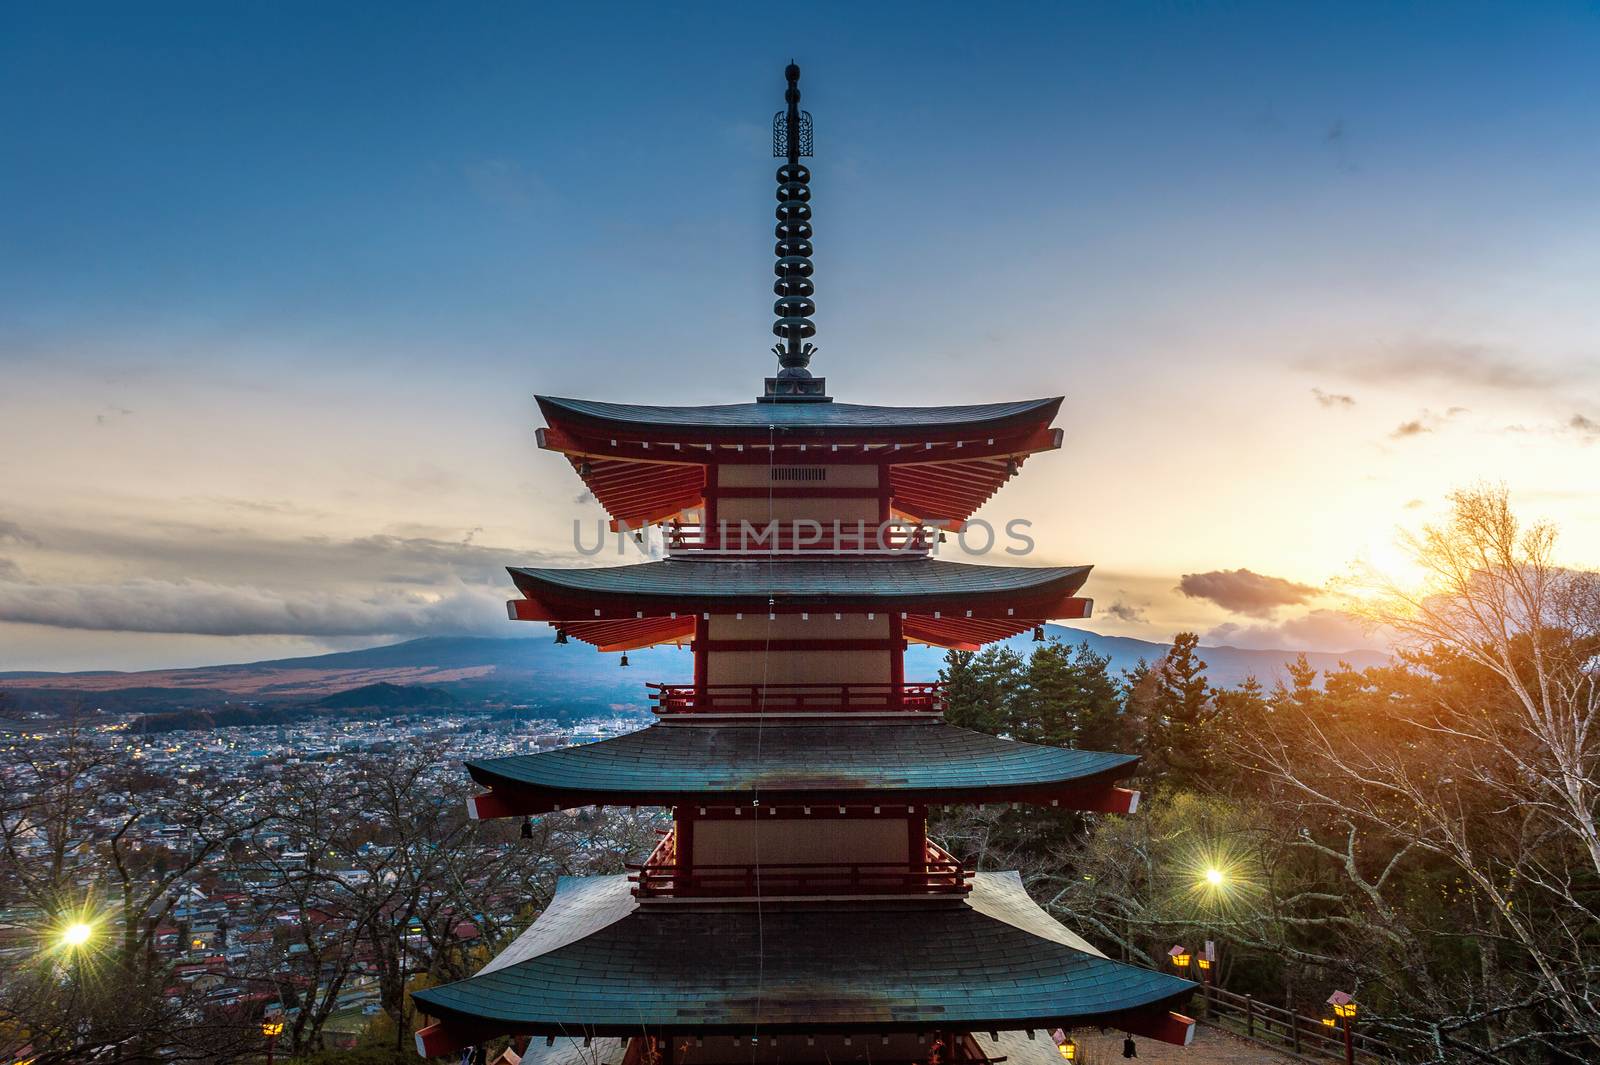 The red chureito pagoda at sunset, Japan.